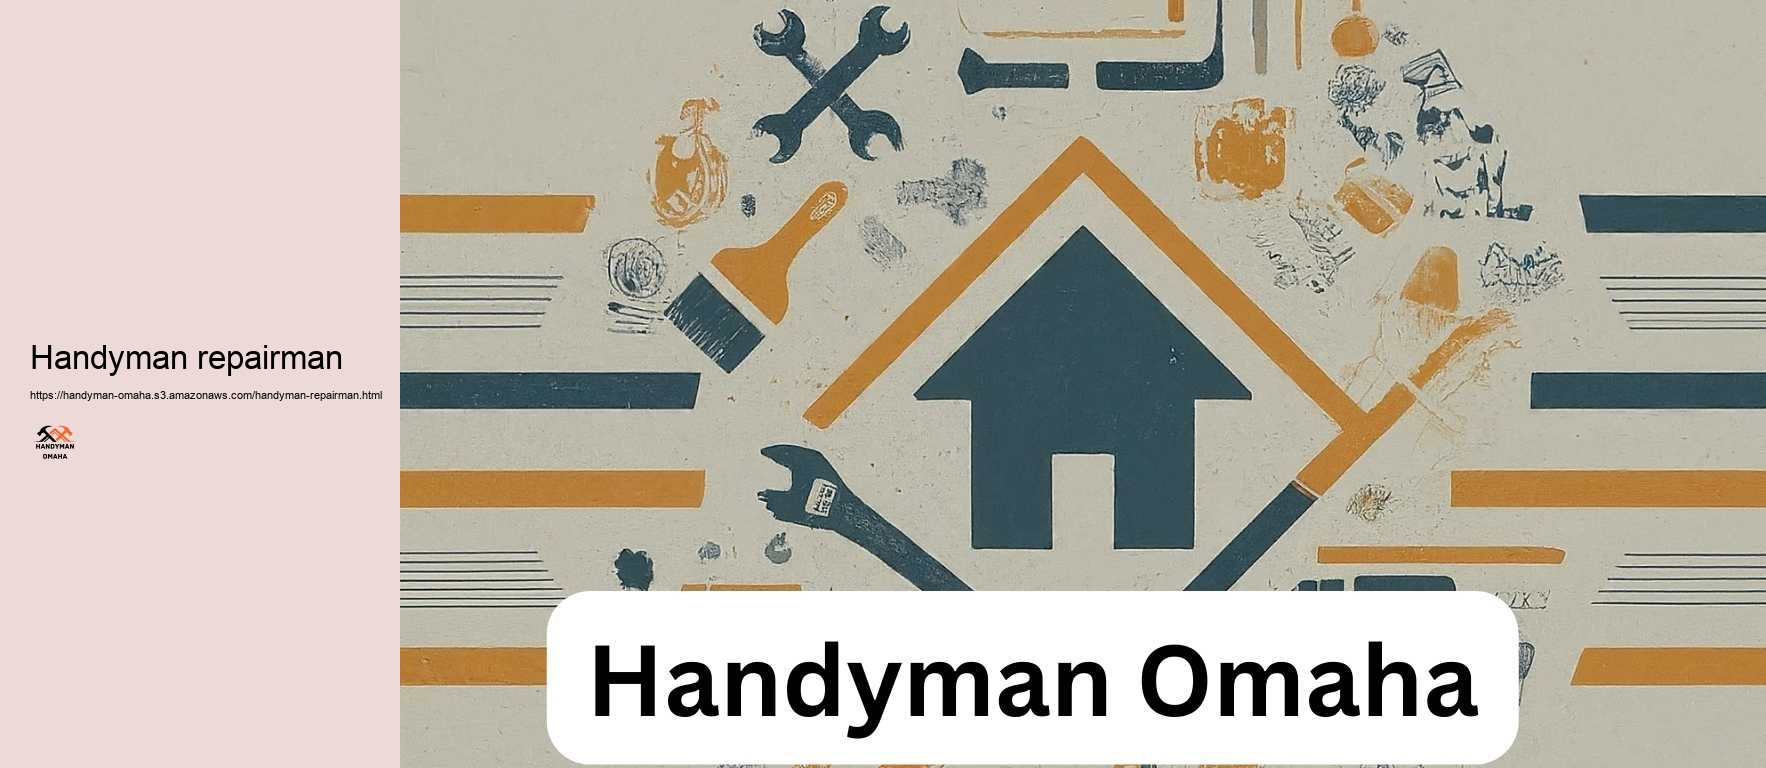 Handyman repairman